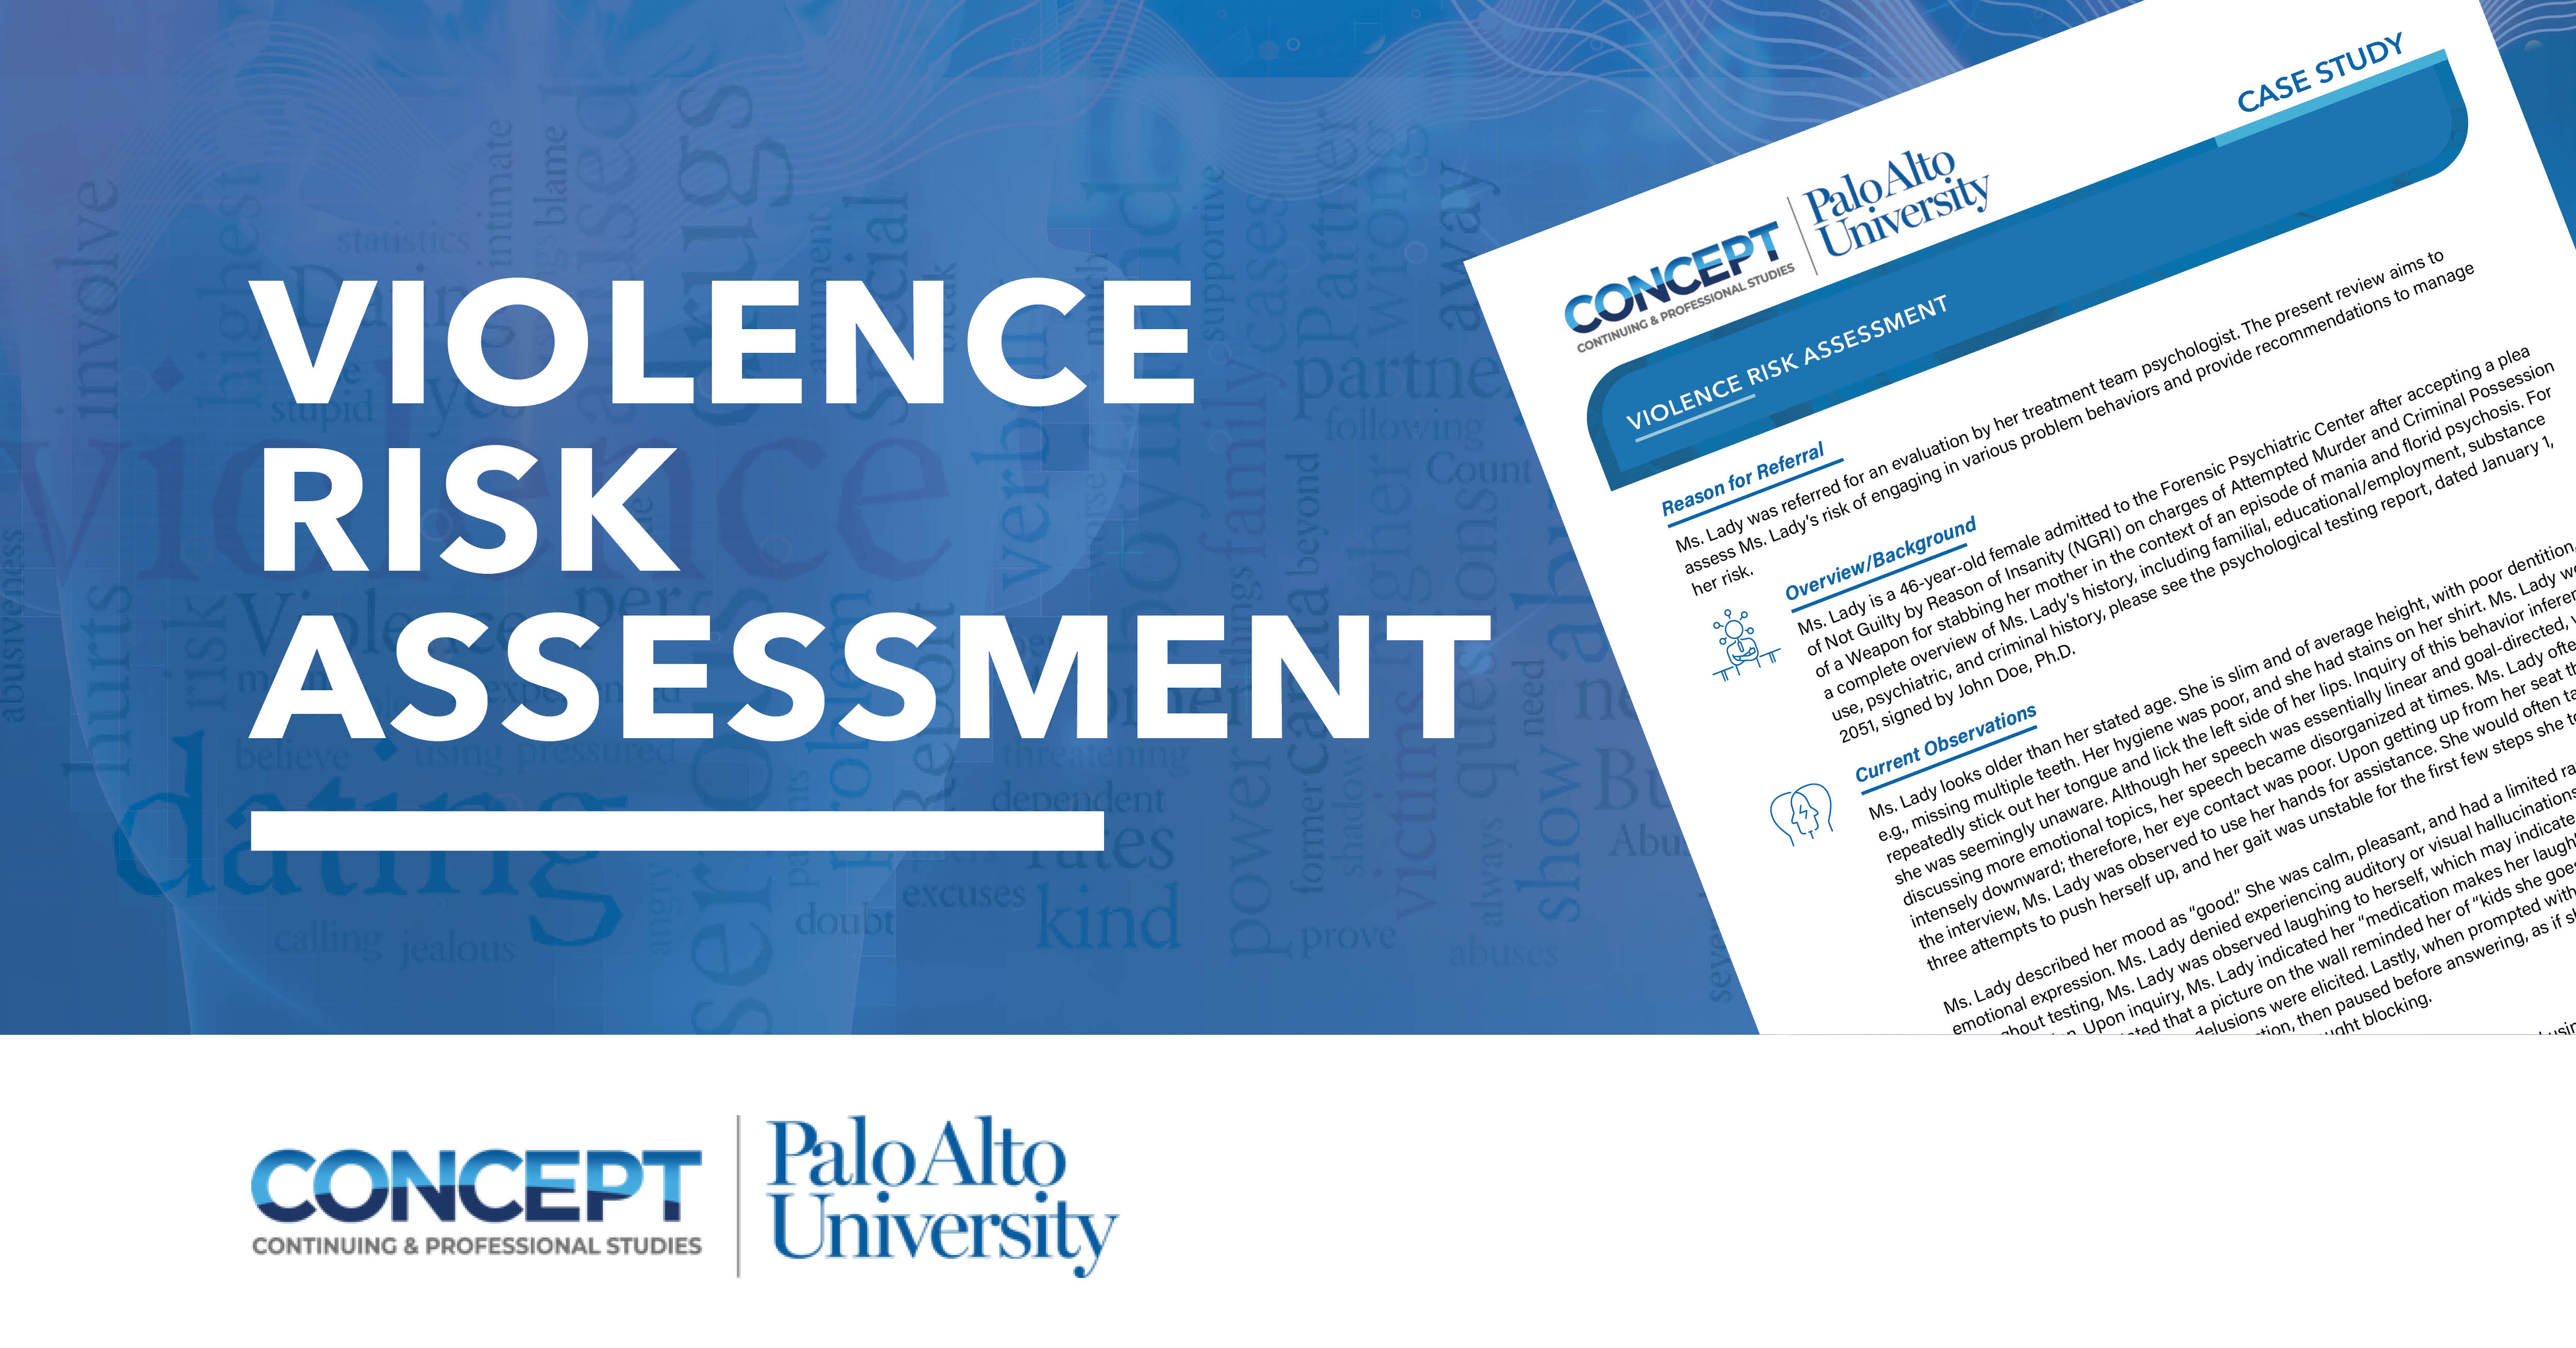 Violence Risk Assessment Case Study: Dangerousness Evaluation using the START